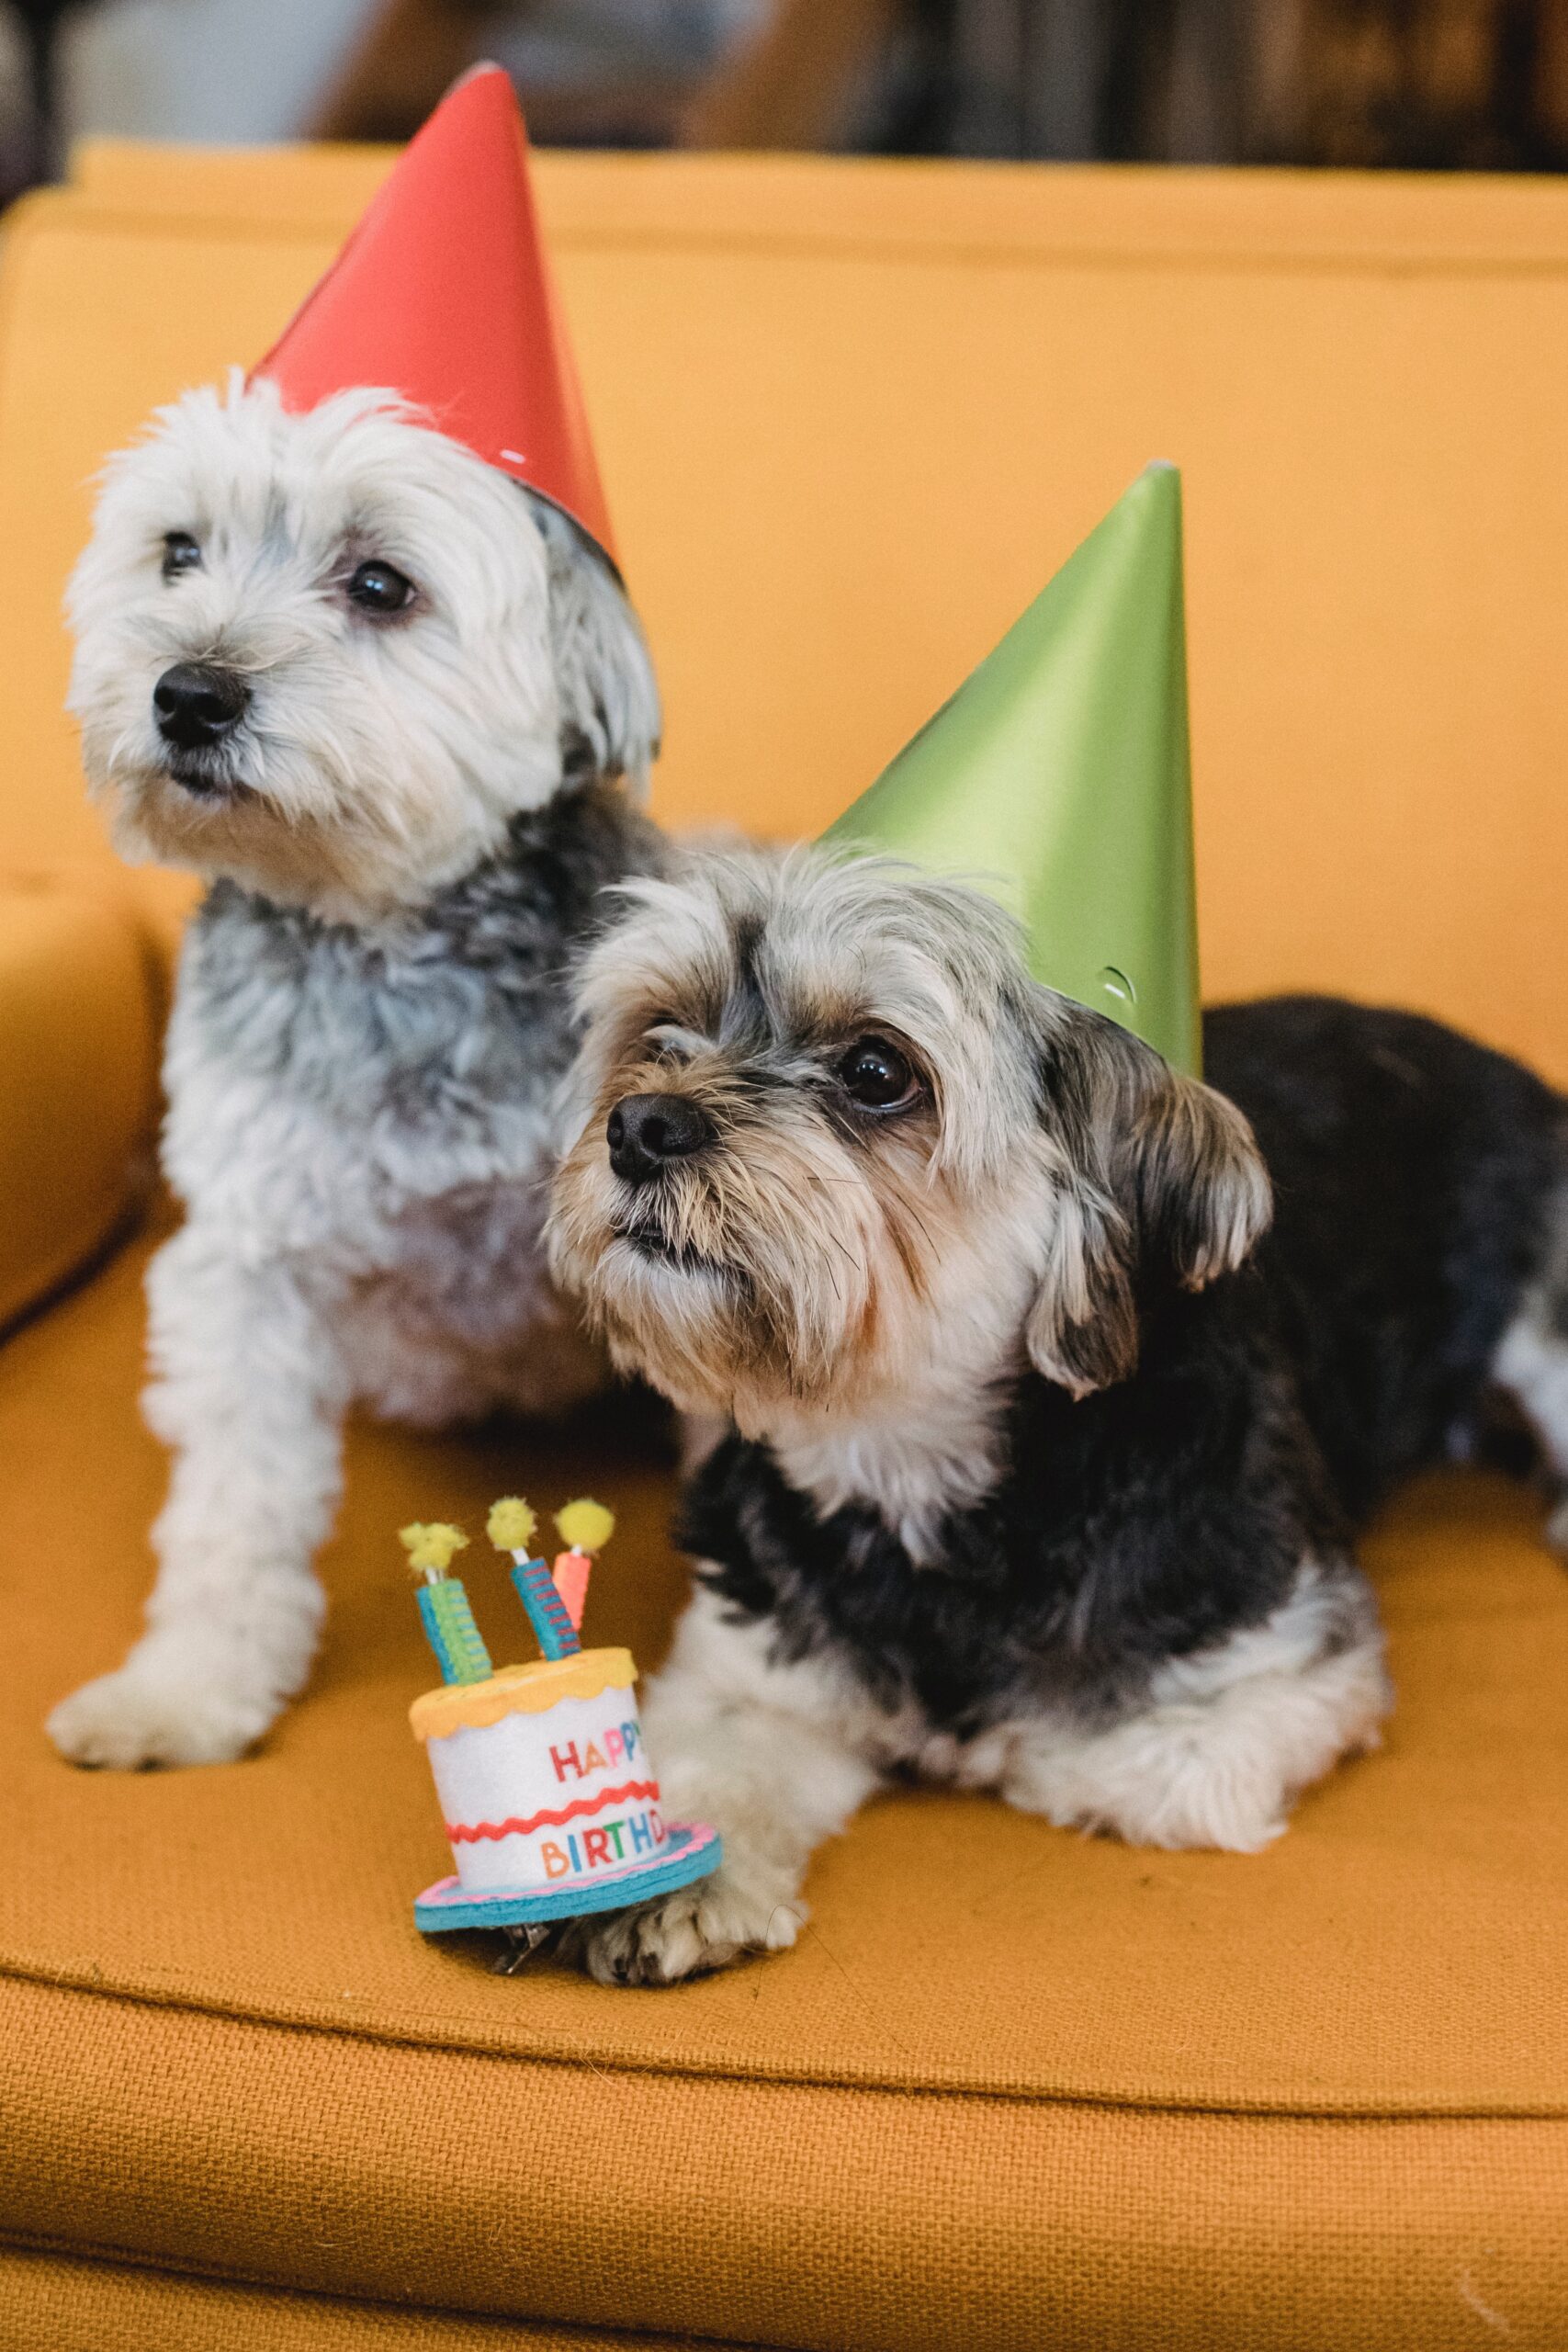 Dog Birthday Captions for Instagram